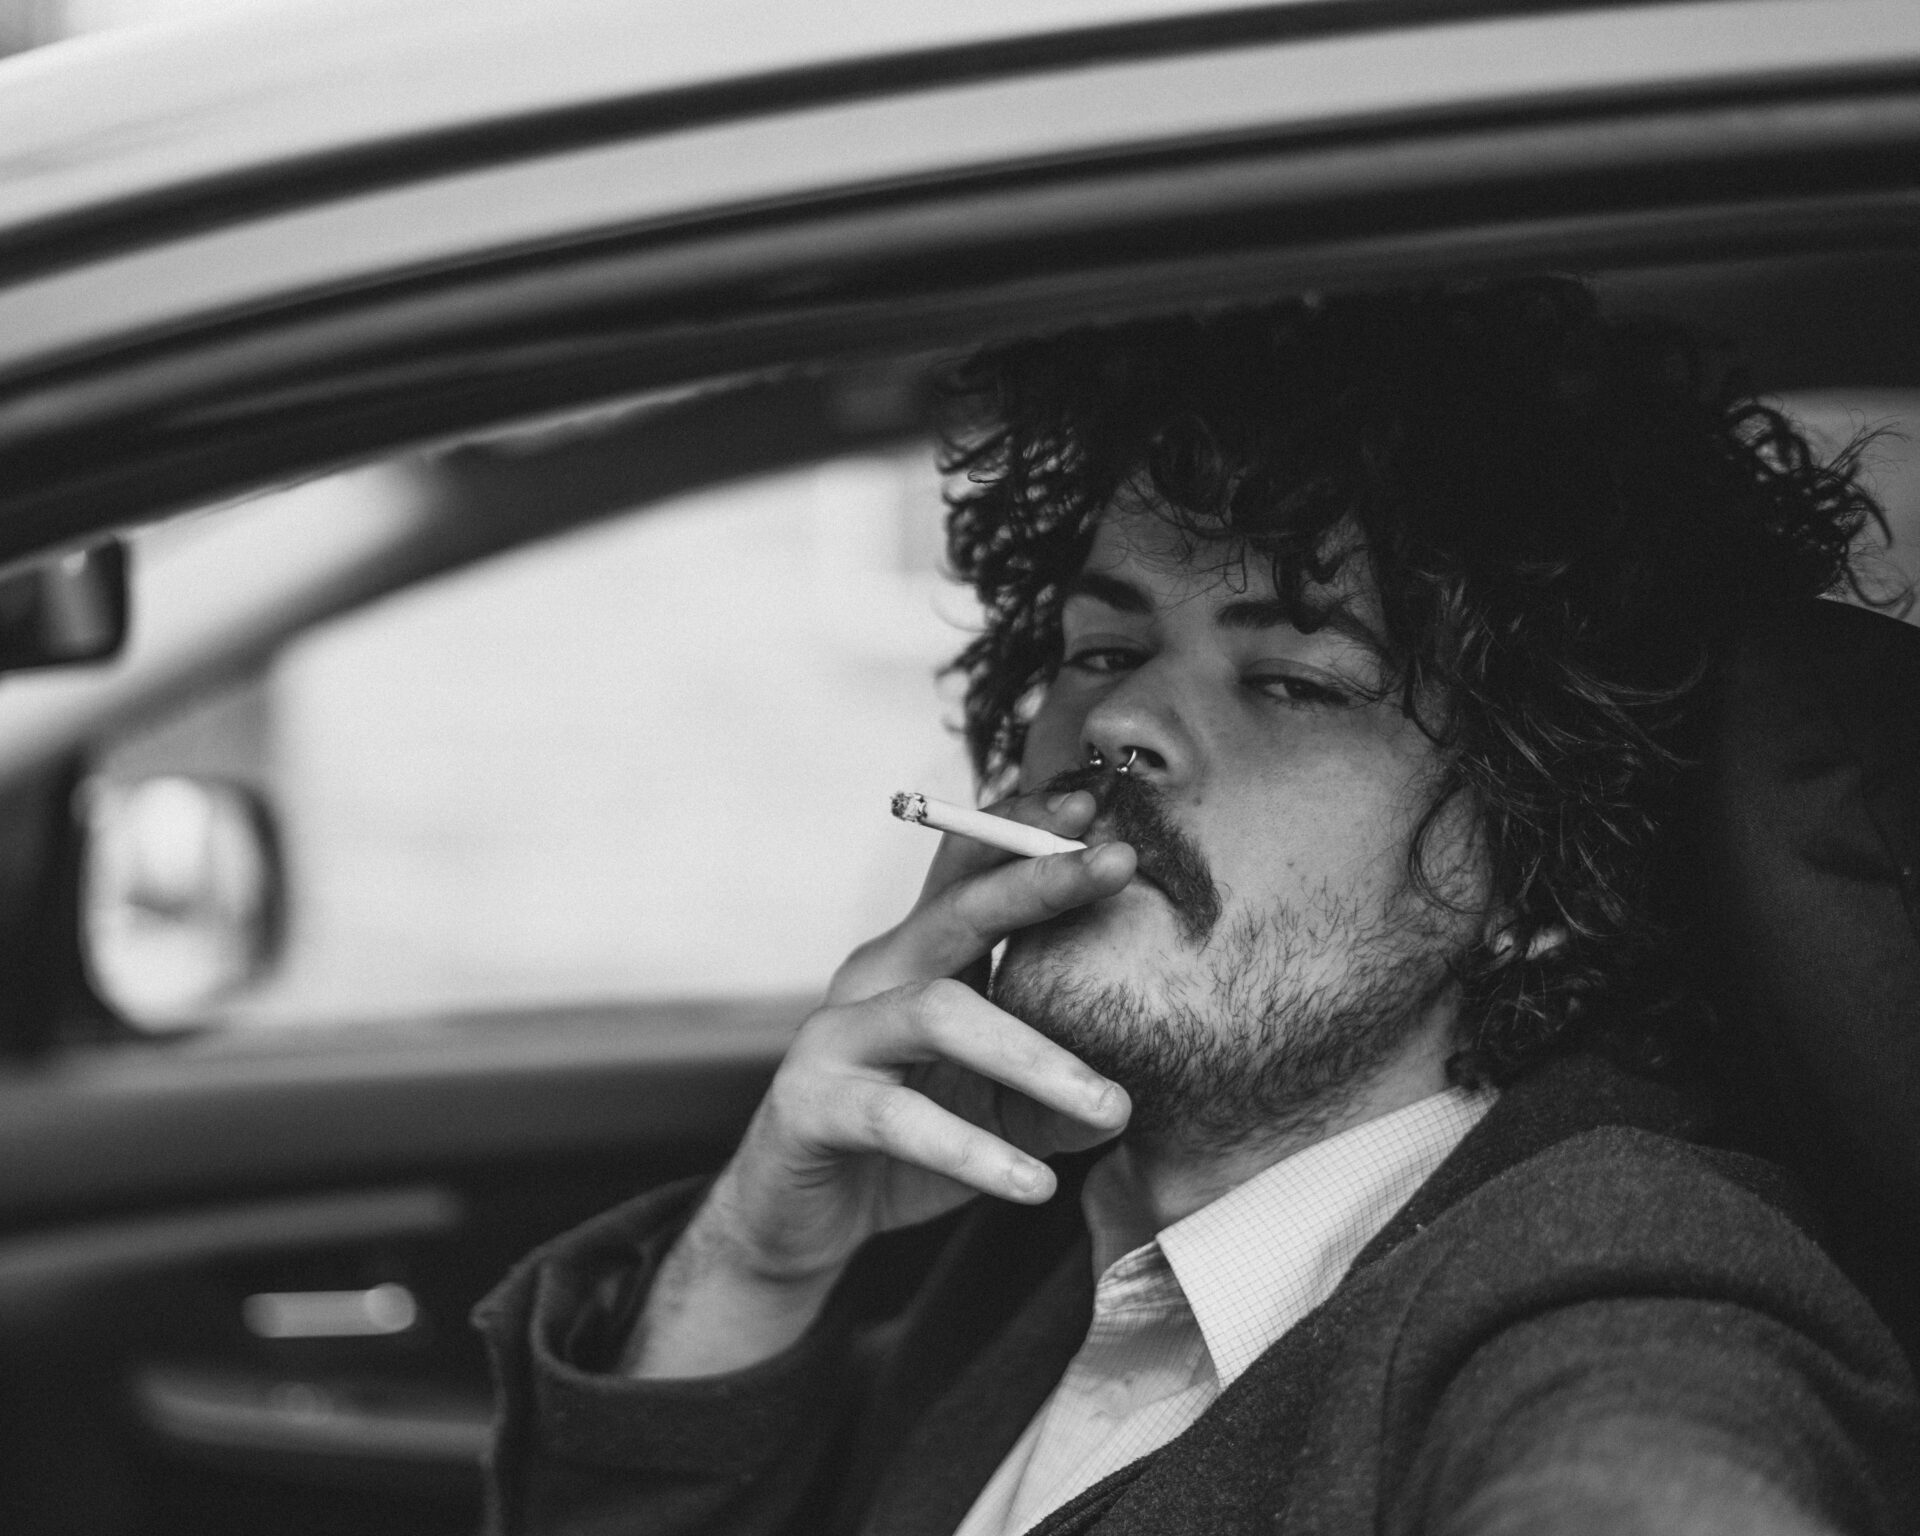 A Man Smoking a Cigarette in a Car